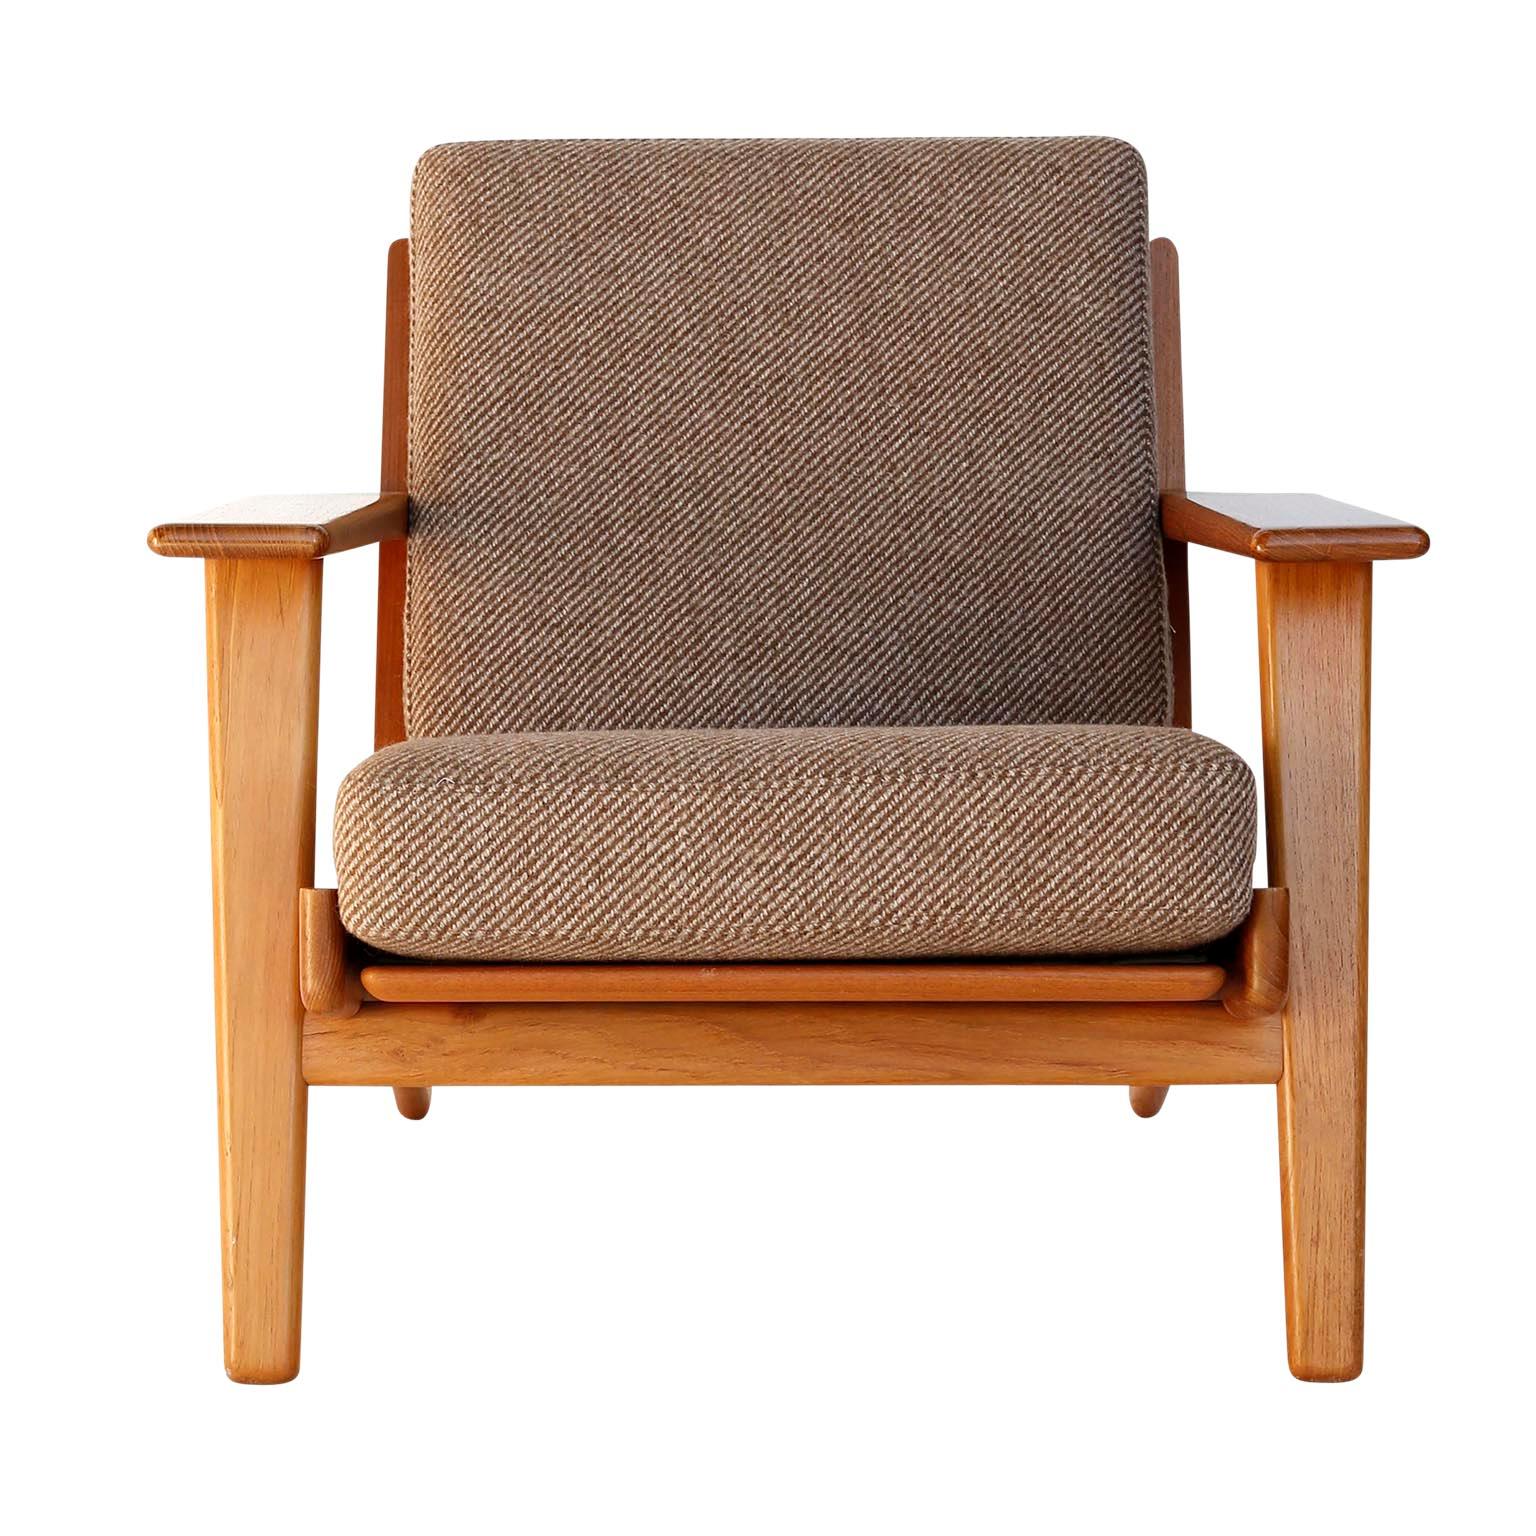 Metal Pair of Hans Wegner Lounge Chairs Ottoman GE290 GETAMA, Teak, Denmark, 1953